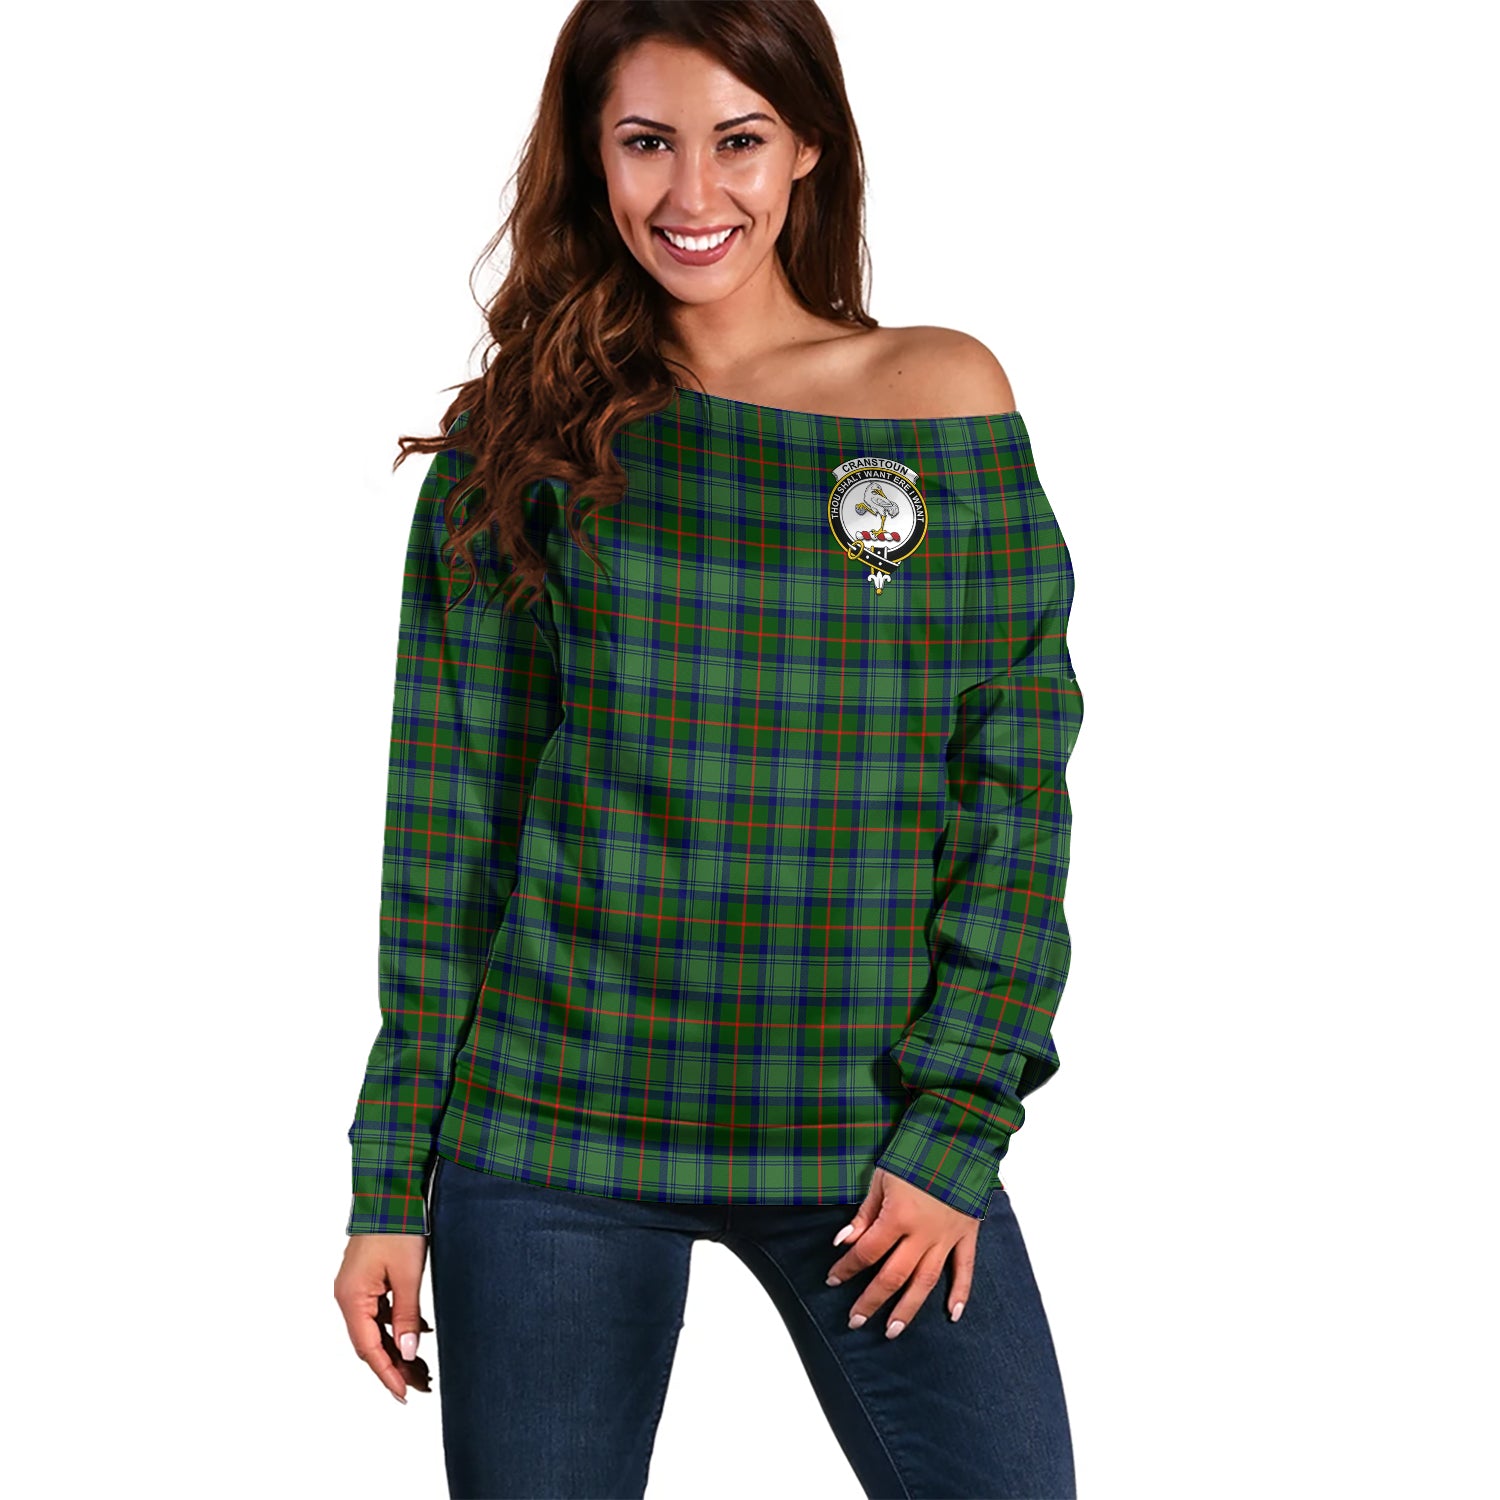 cranstoun-clan-tartan-off-shoulder-sweater-family-crest-sweater-for-women